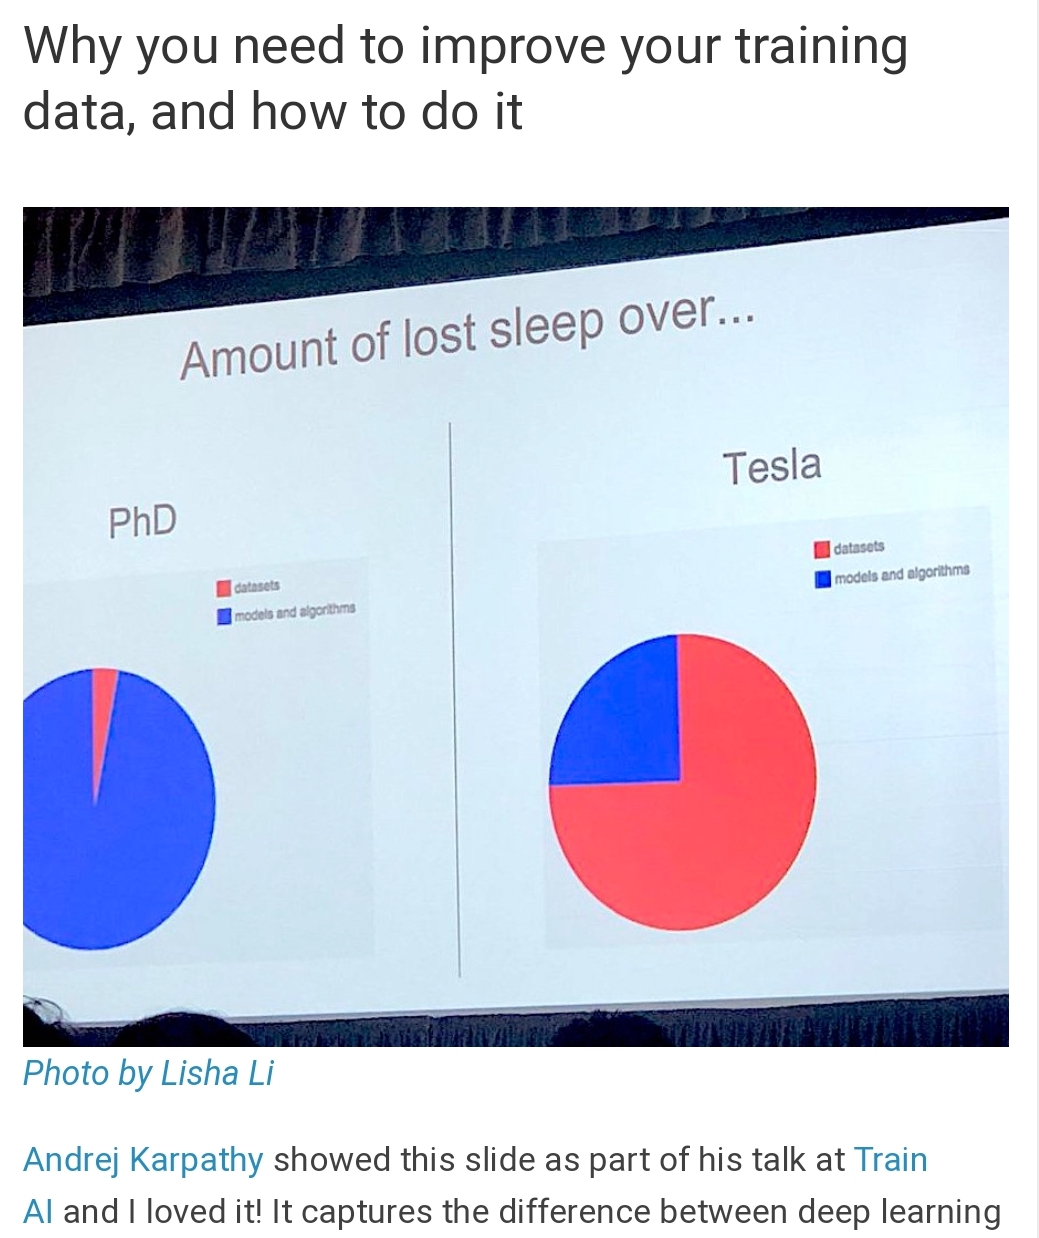 Andrej Karpathy (Director of AI at Tesla)